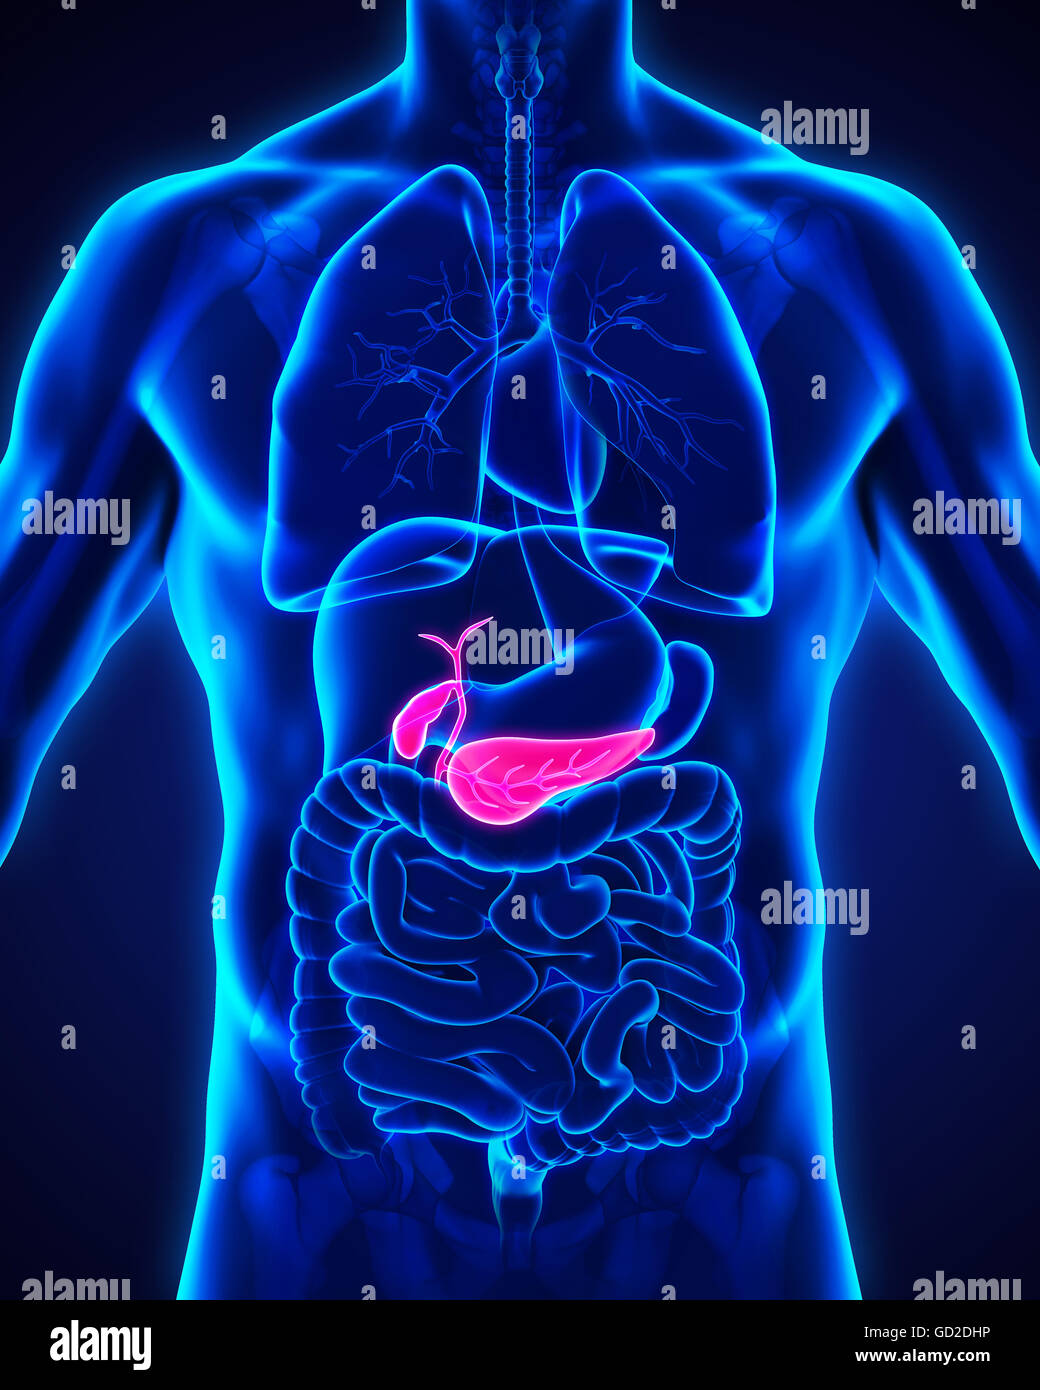 Human Gallbladder and Pancreas Anatomy Stock Photo - Alamy